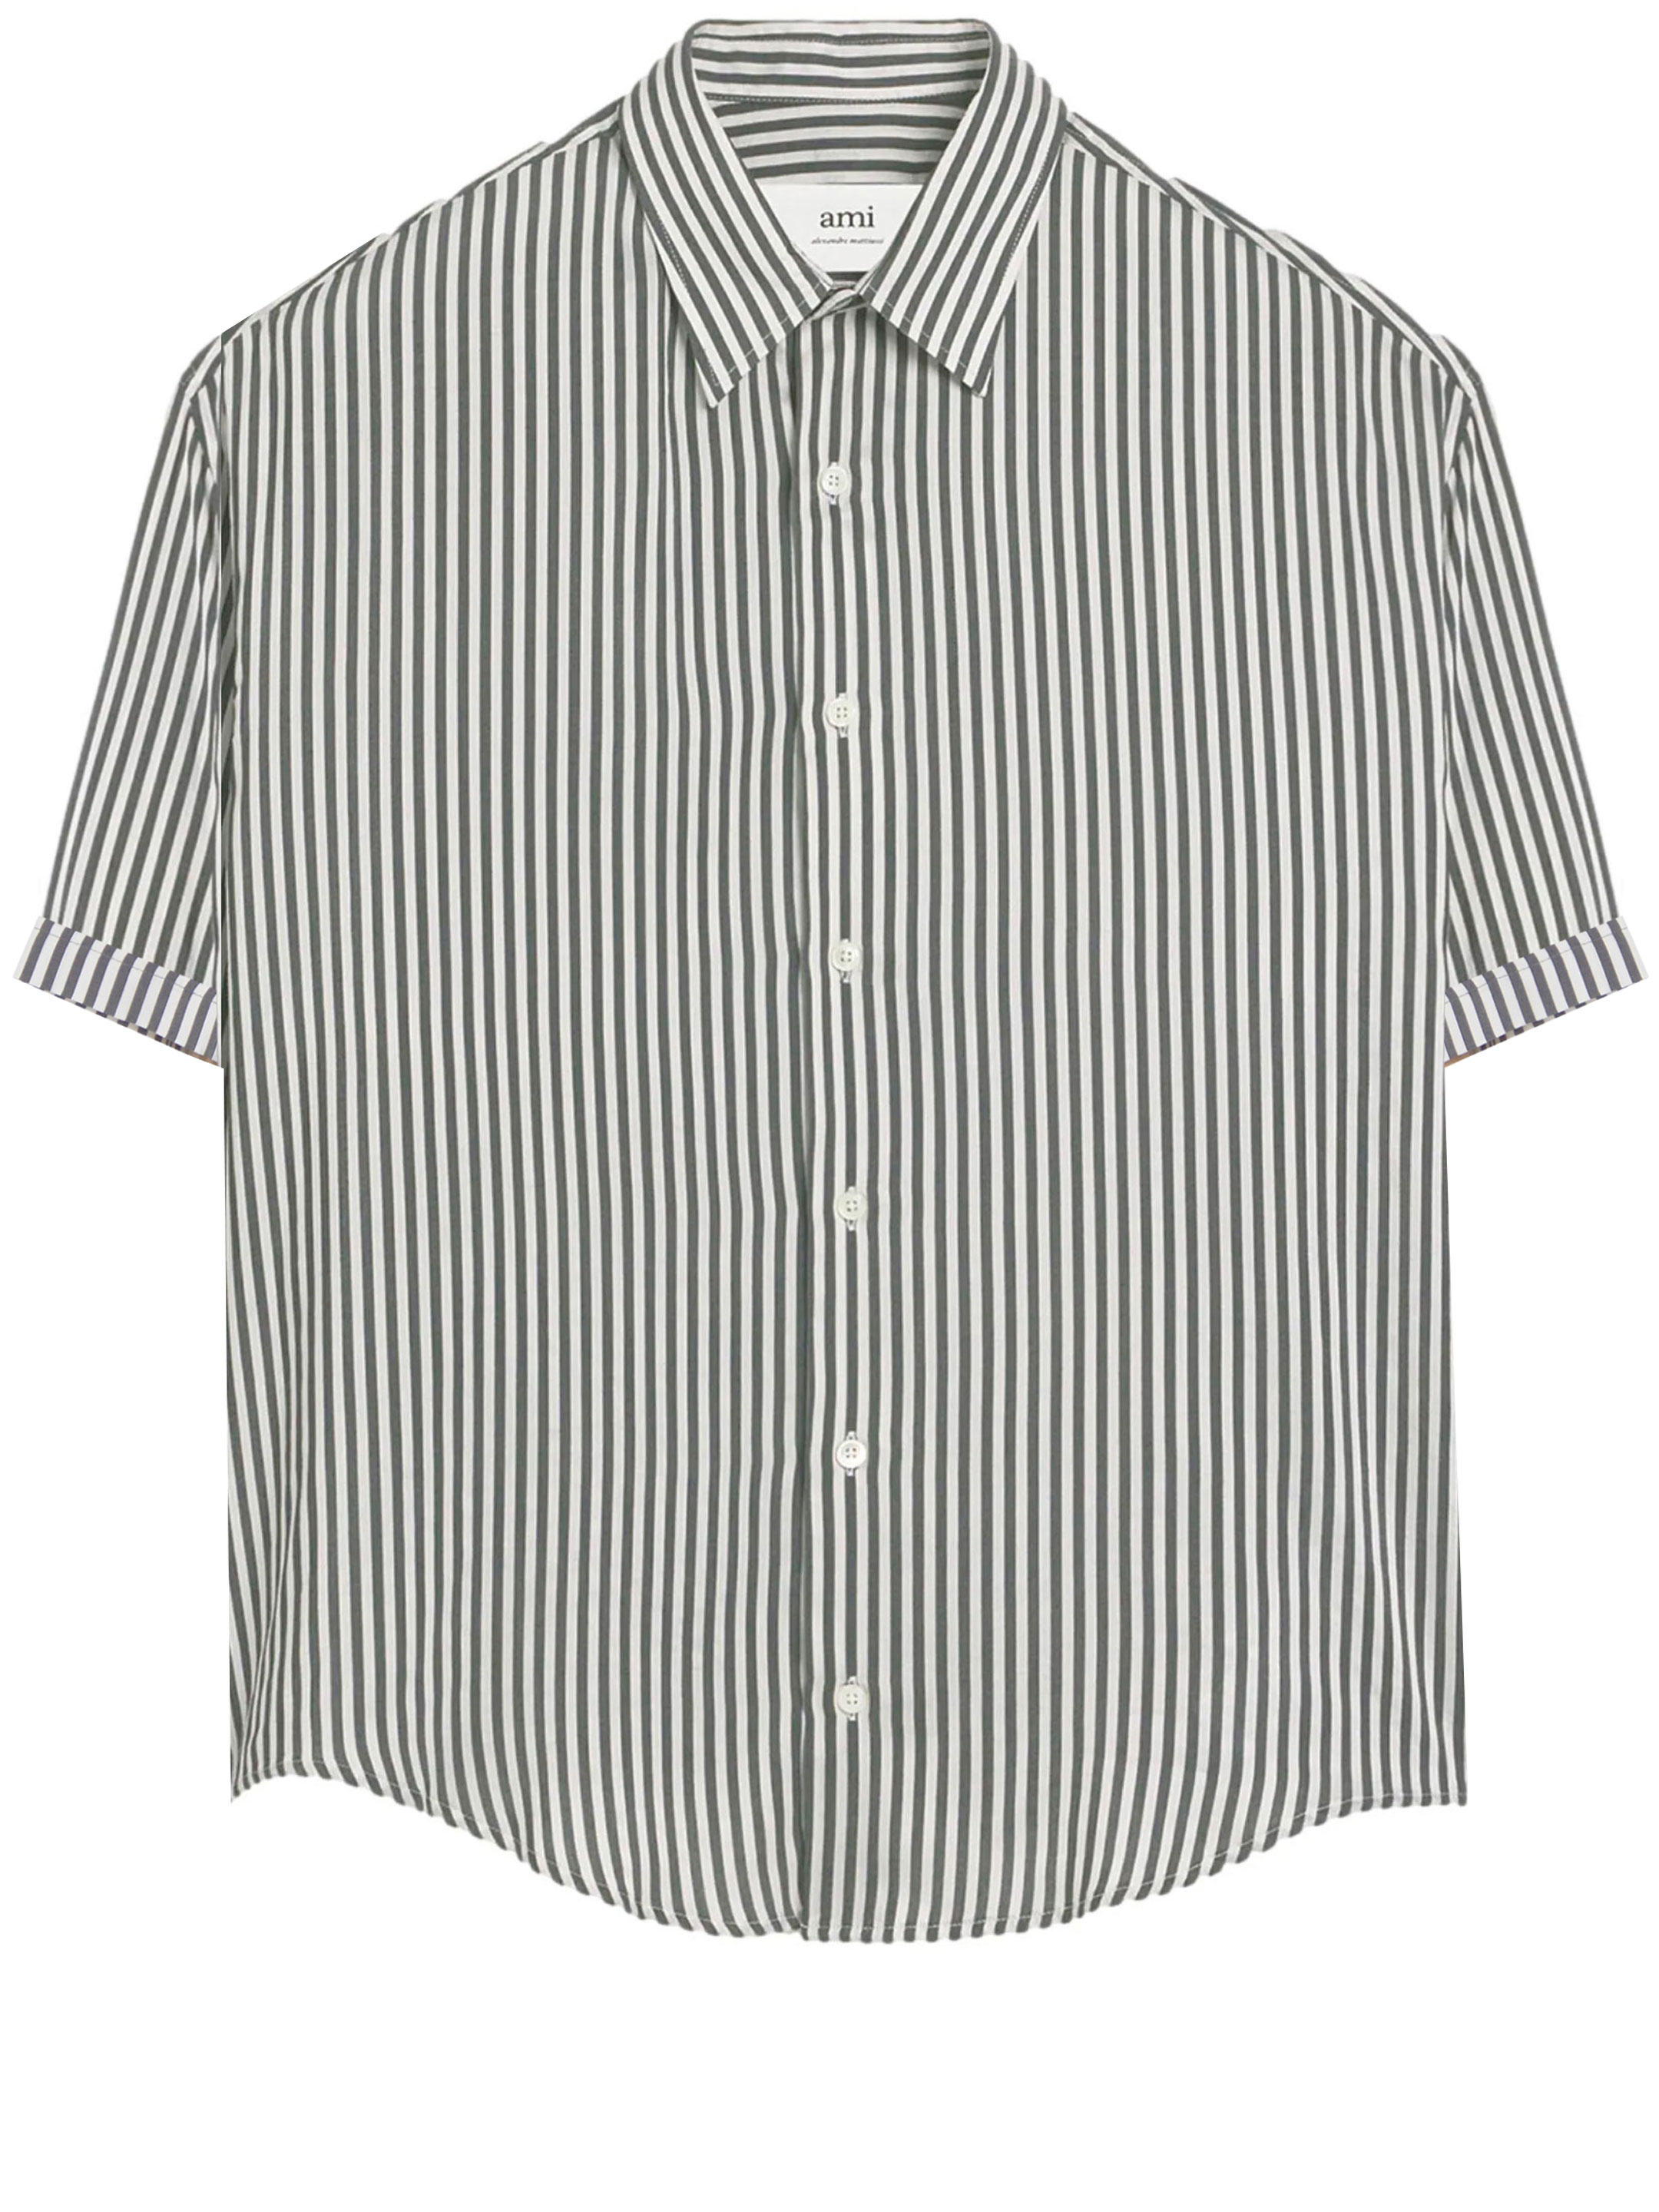 Рубашка Ami Paris Striped, белый футболка в полоску ami paris de coeur marinere